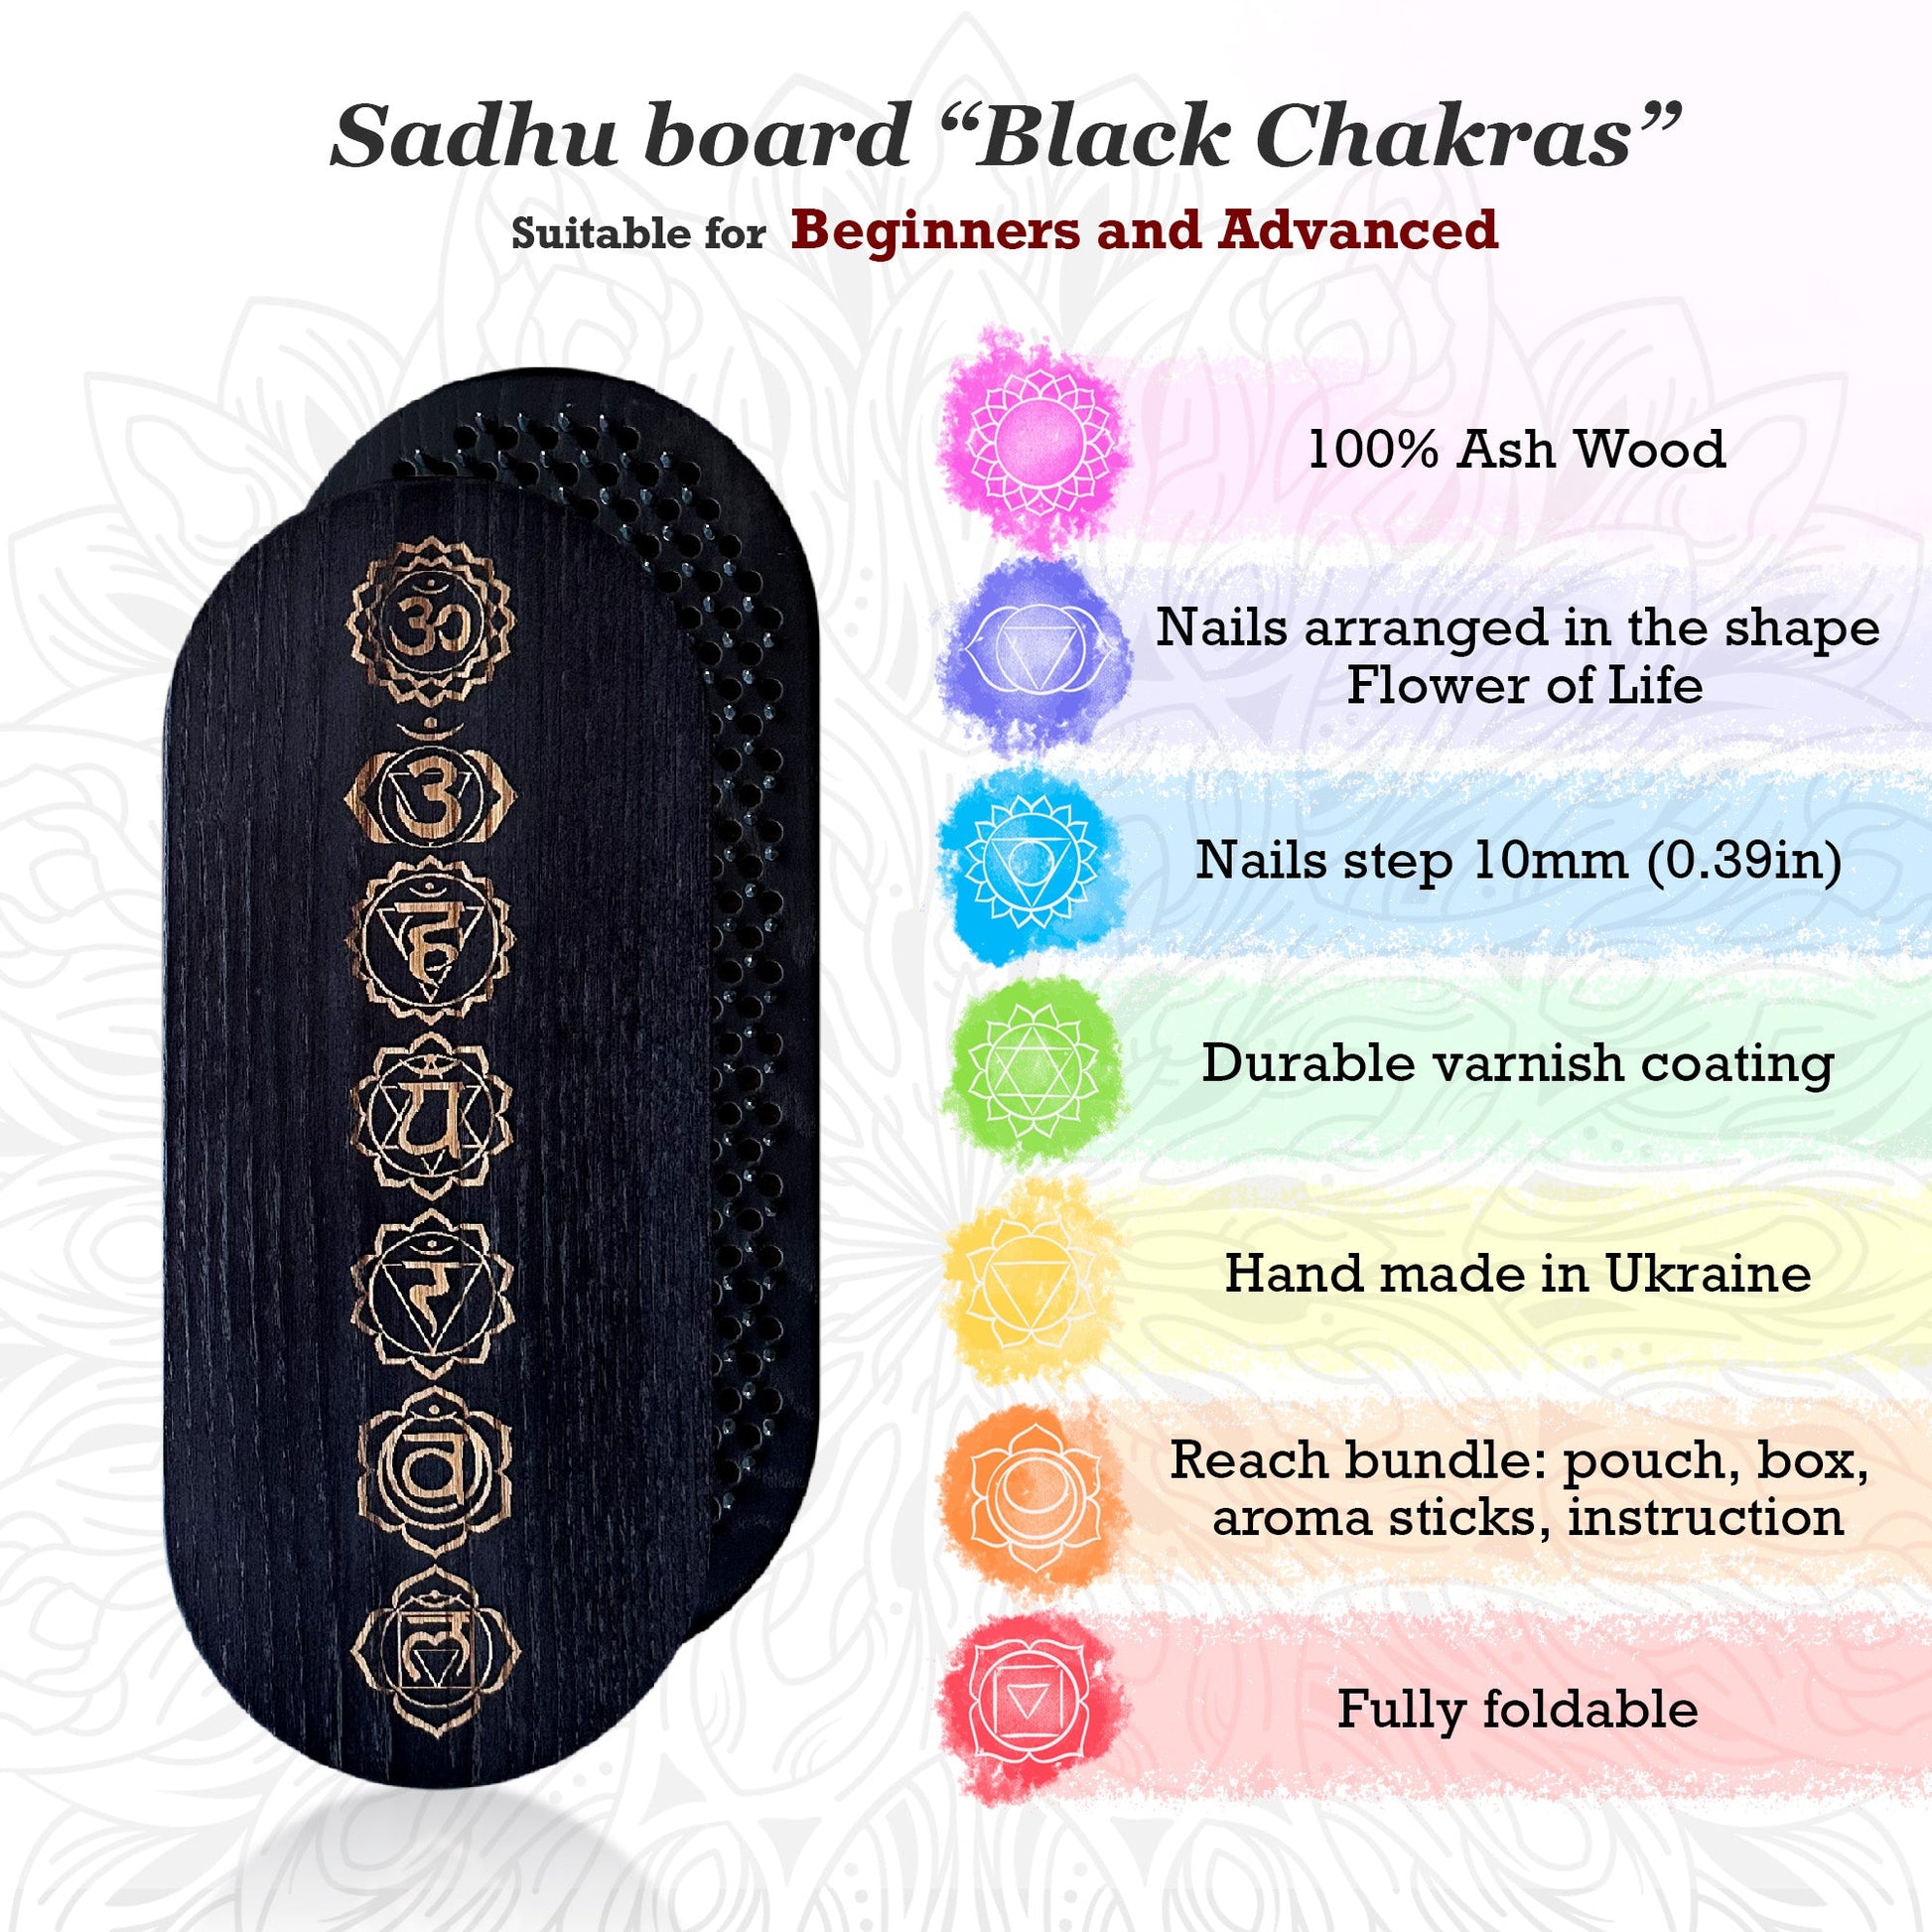 sadhu-board-features